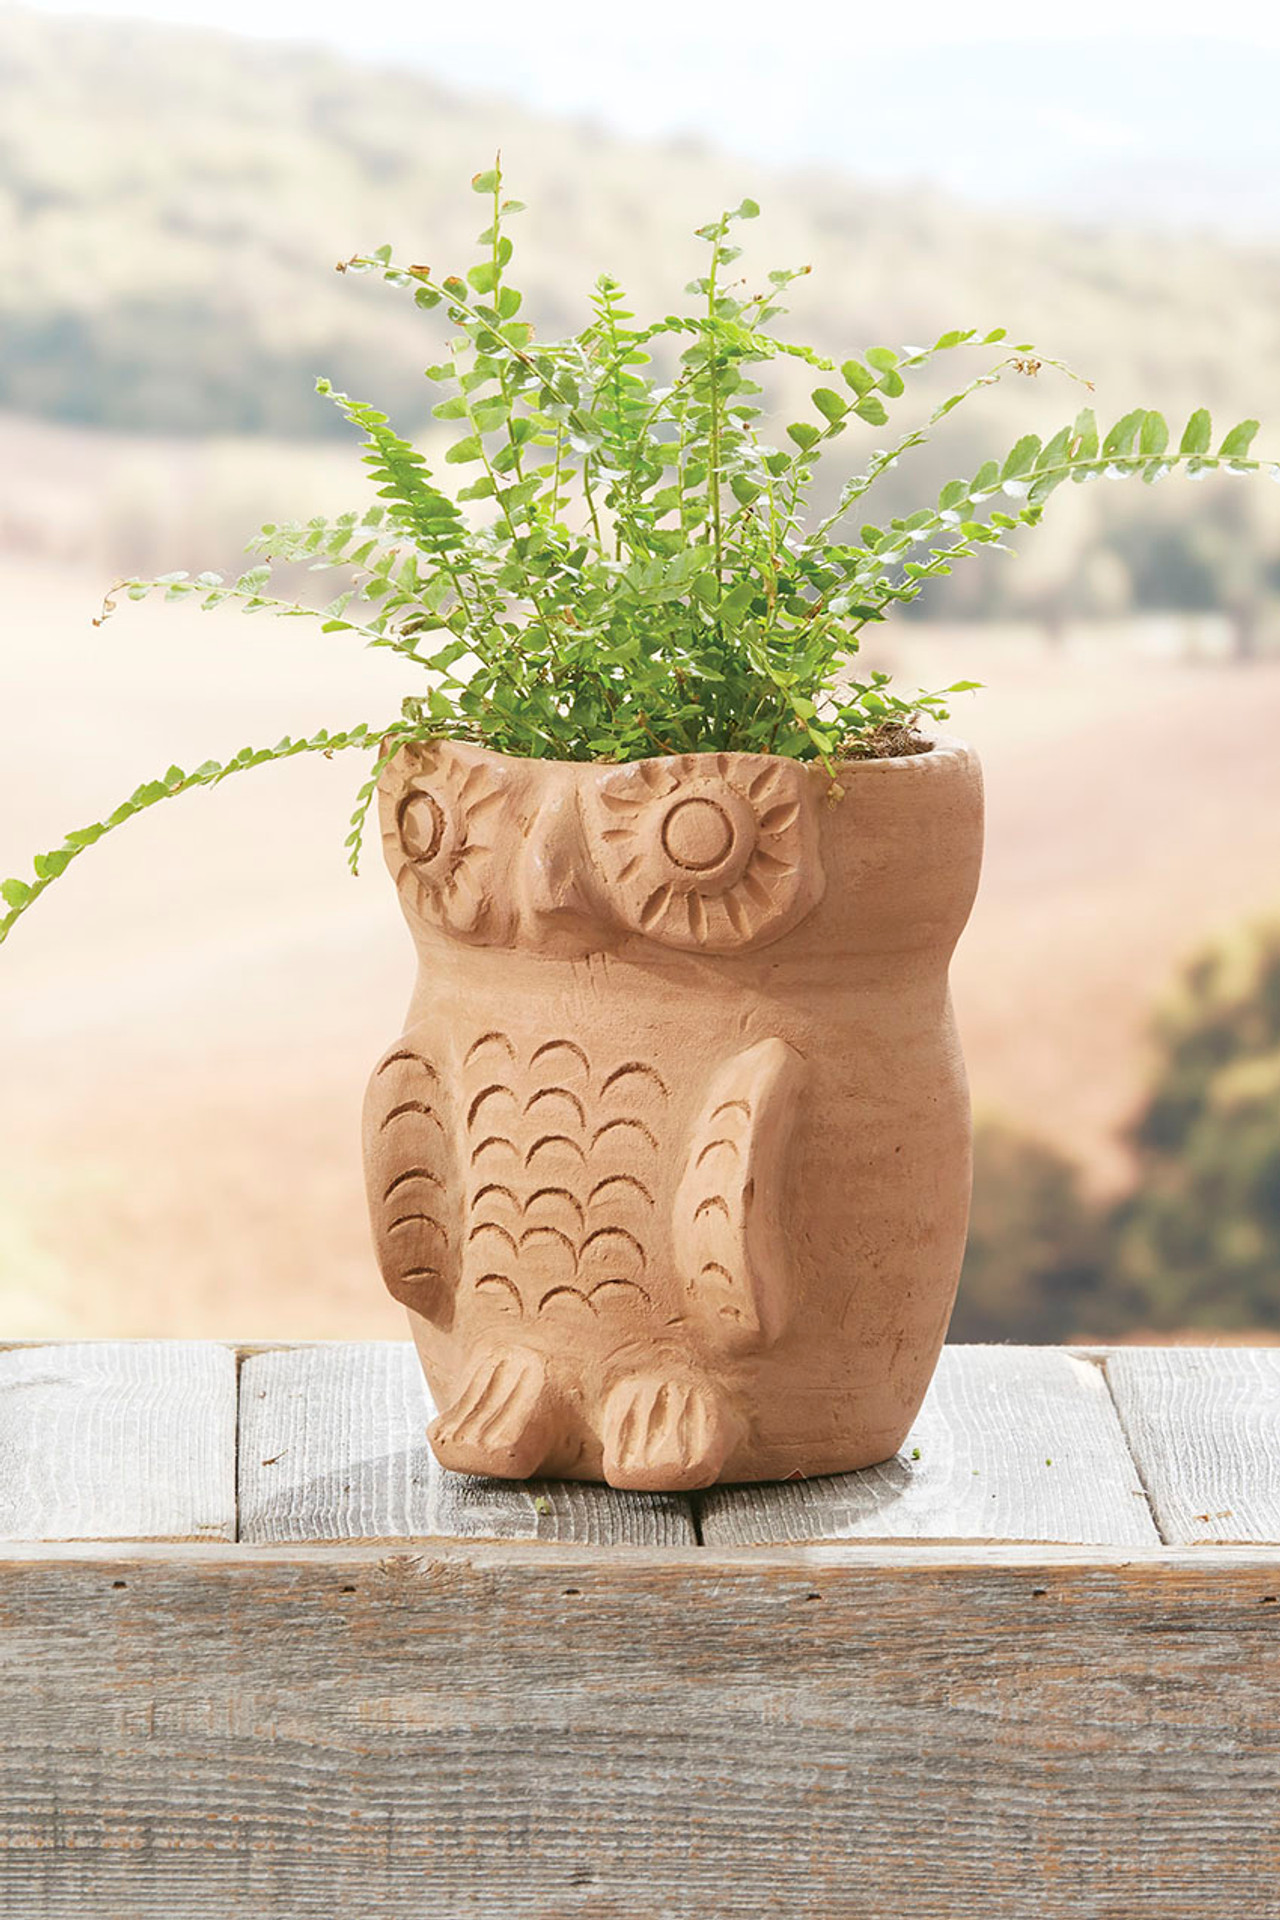 DIY Mossy Terracotta Pot Candles – Nickels Creek Mercantile